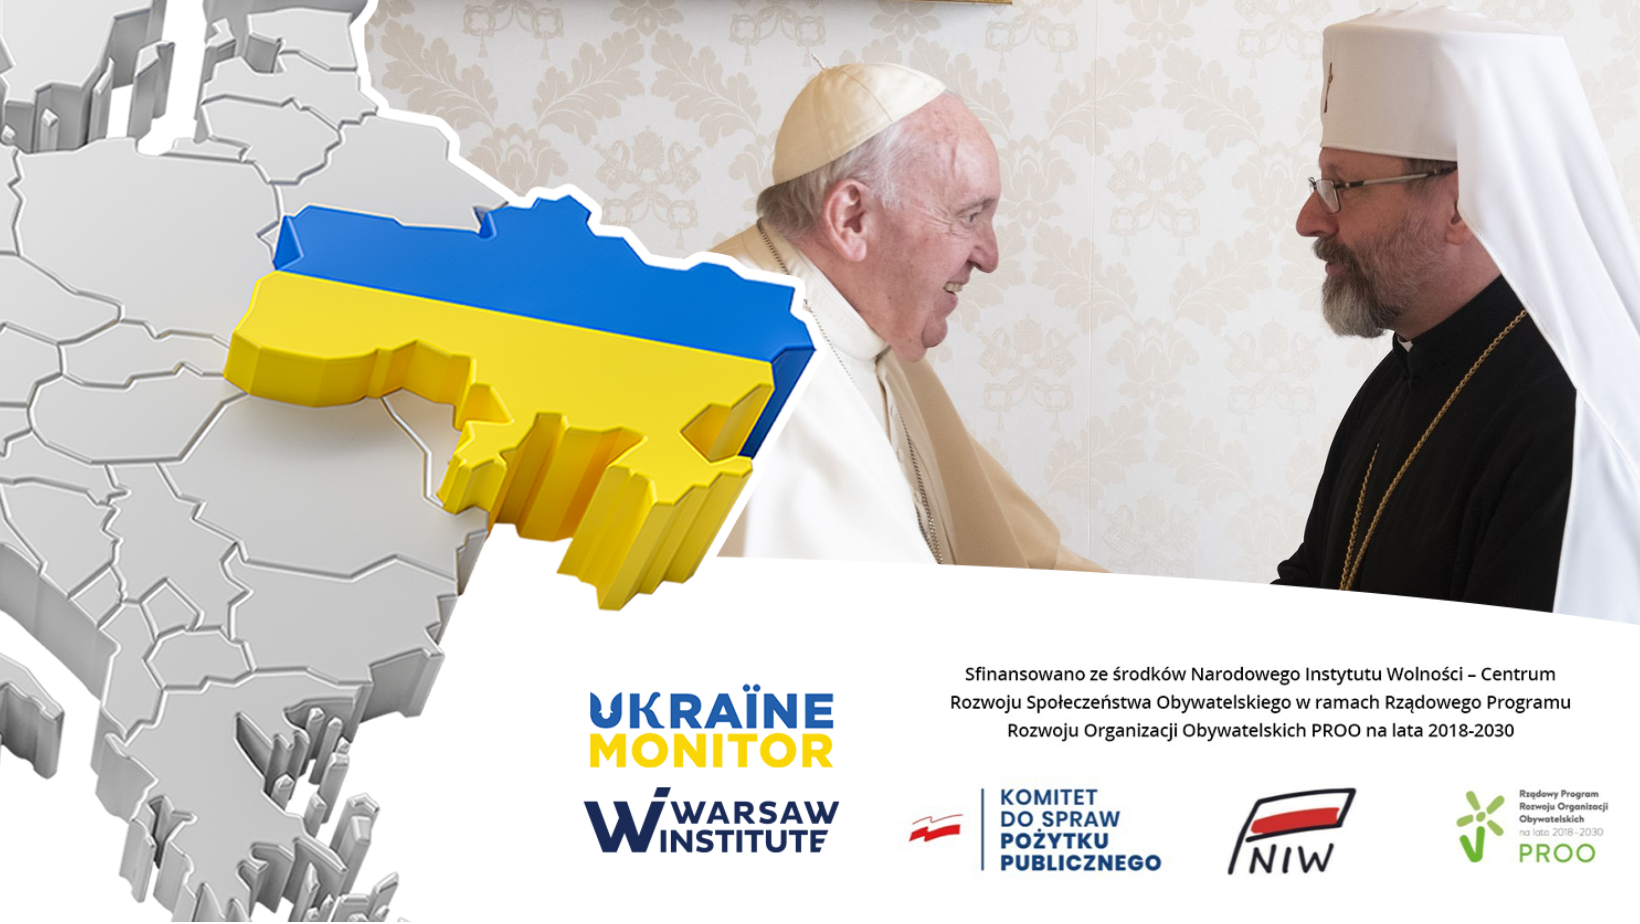 Pope Francis Meets Ukrainian Catholic Leader at Vatican